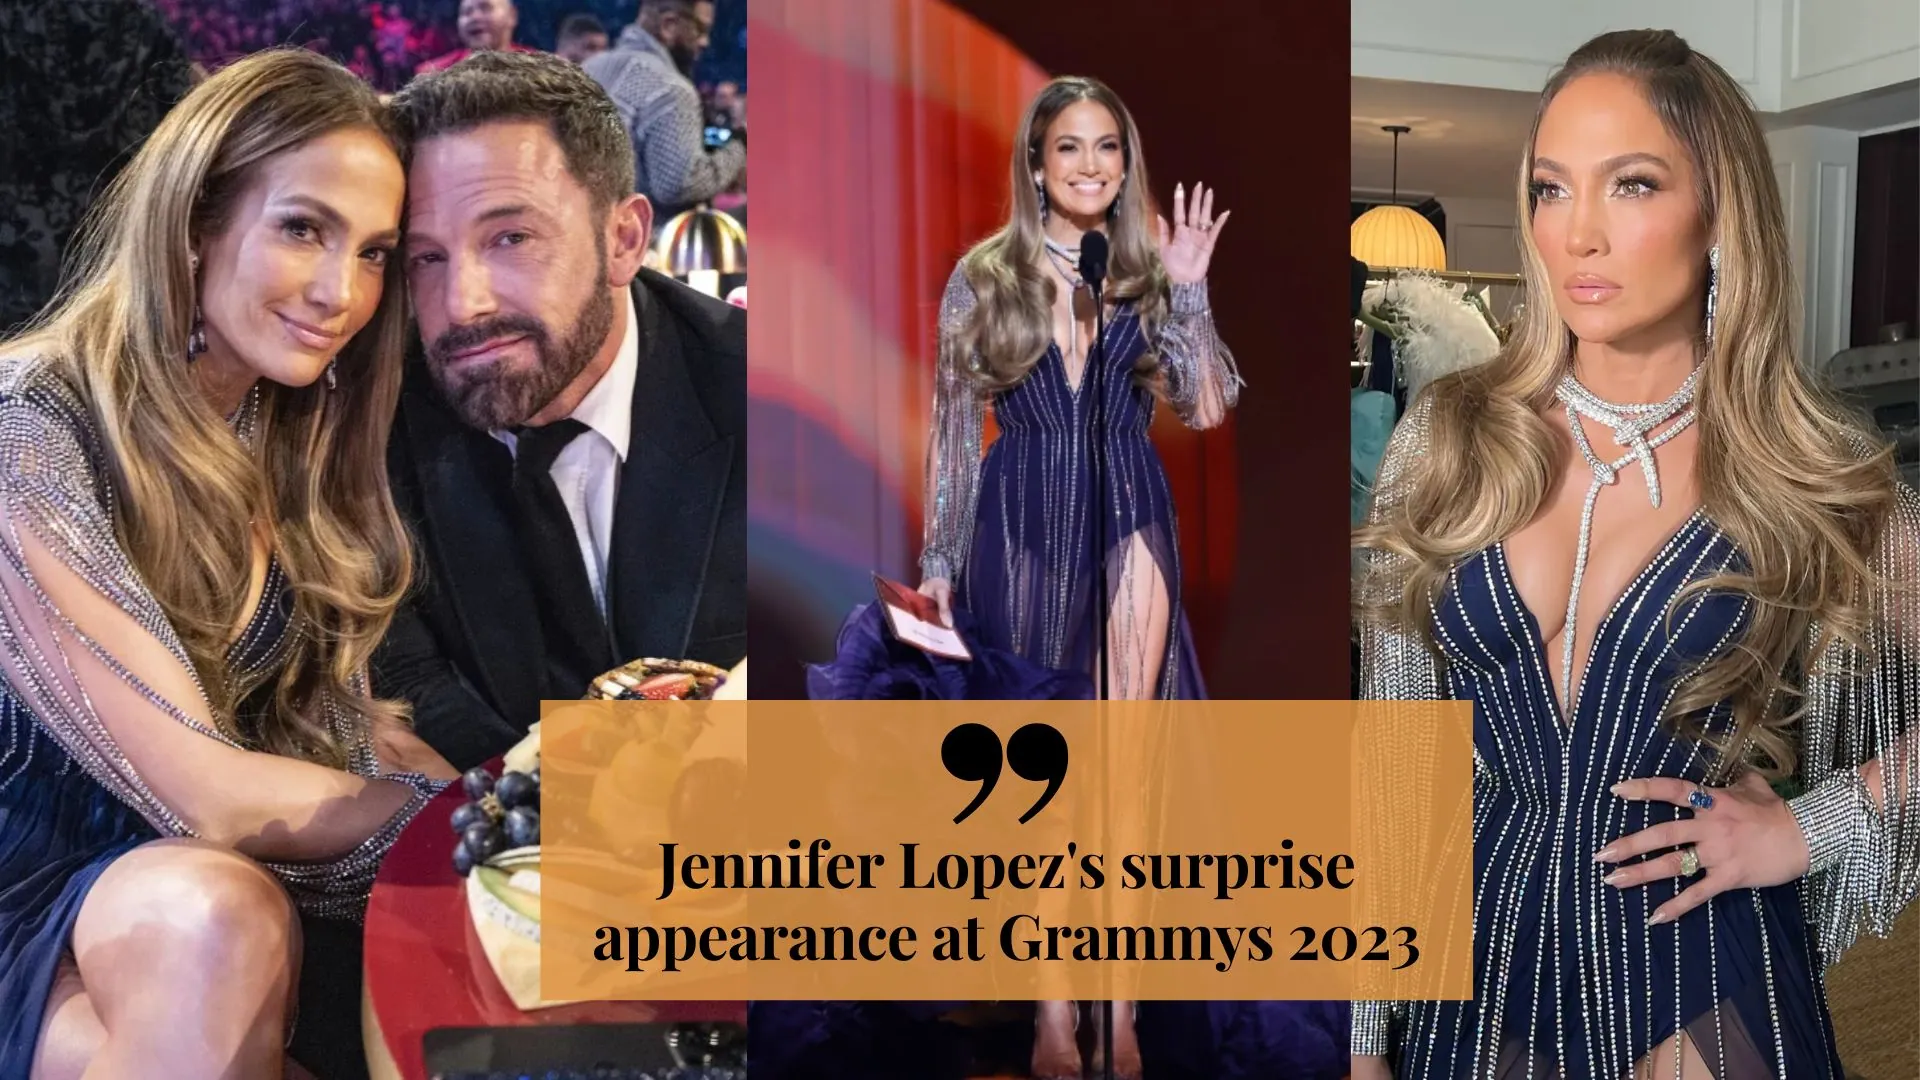 Jennifer Lopez's surprise appearance at Grammys 2023 (Image credit Gretty)